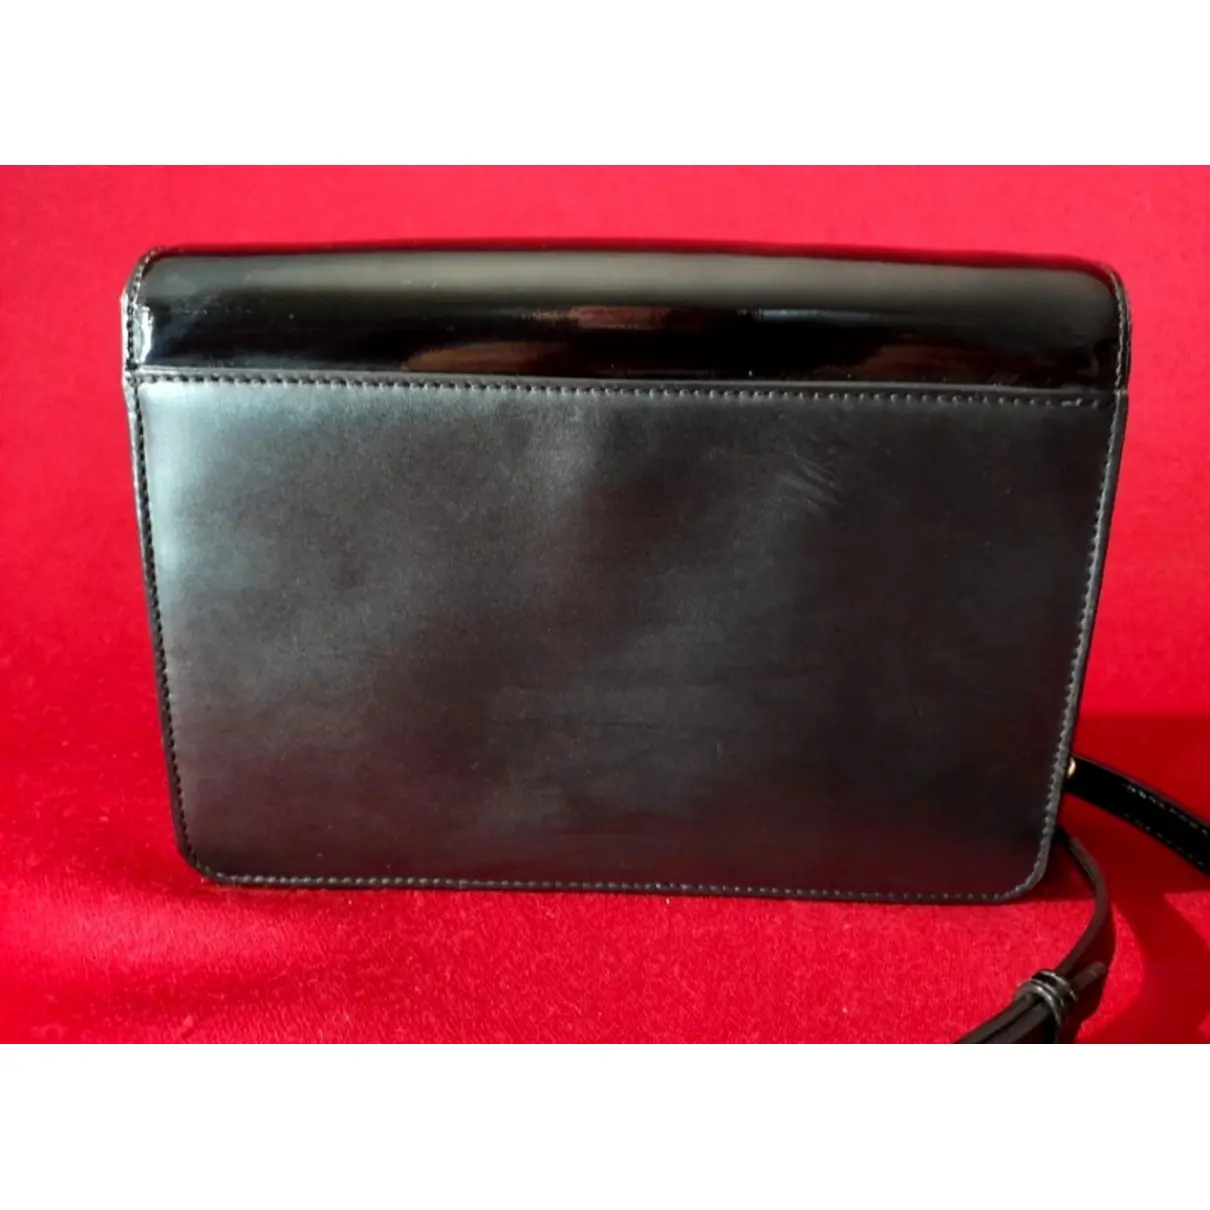 Buy Michael Kors Brooklyn patent leather crossbody bag online